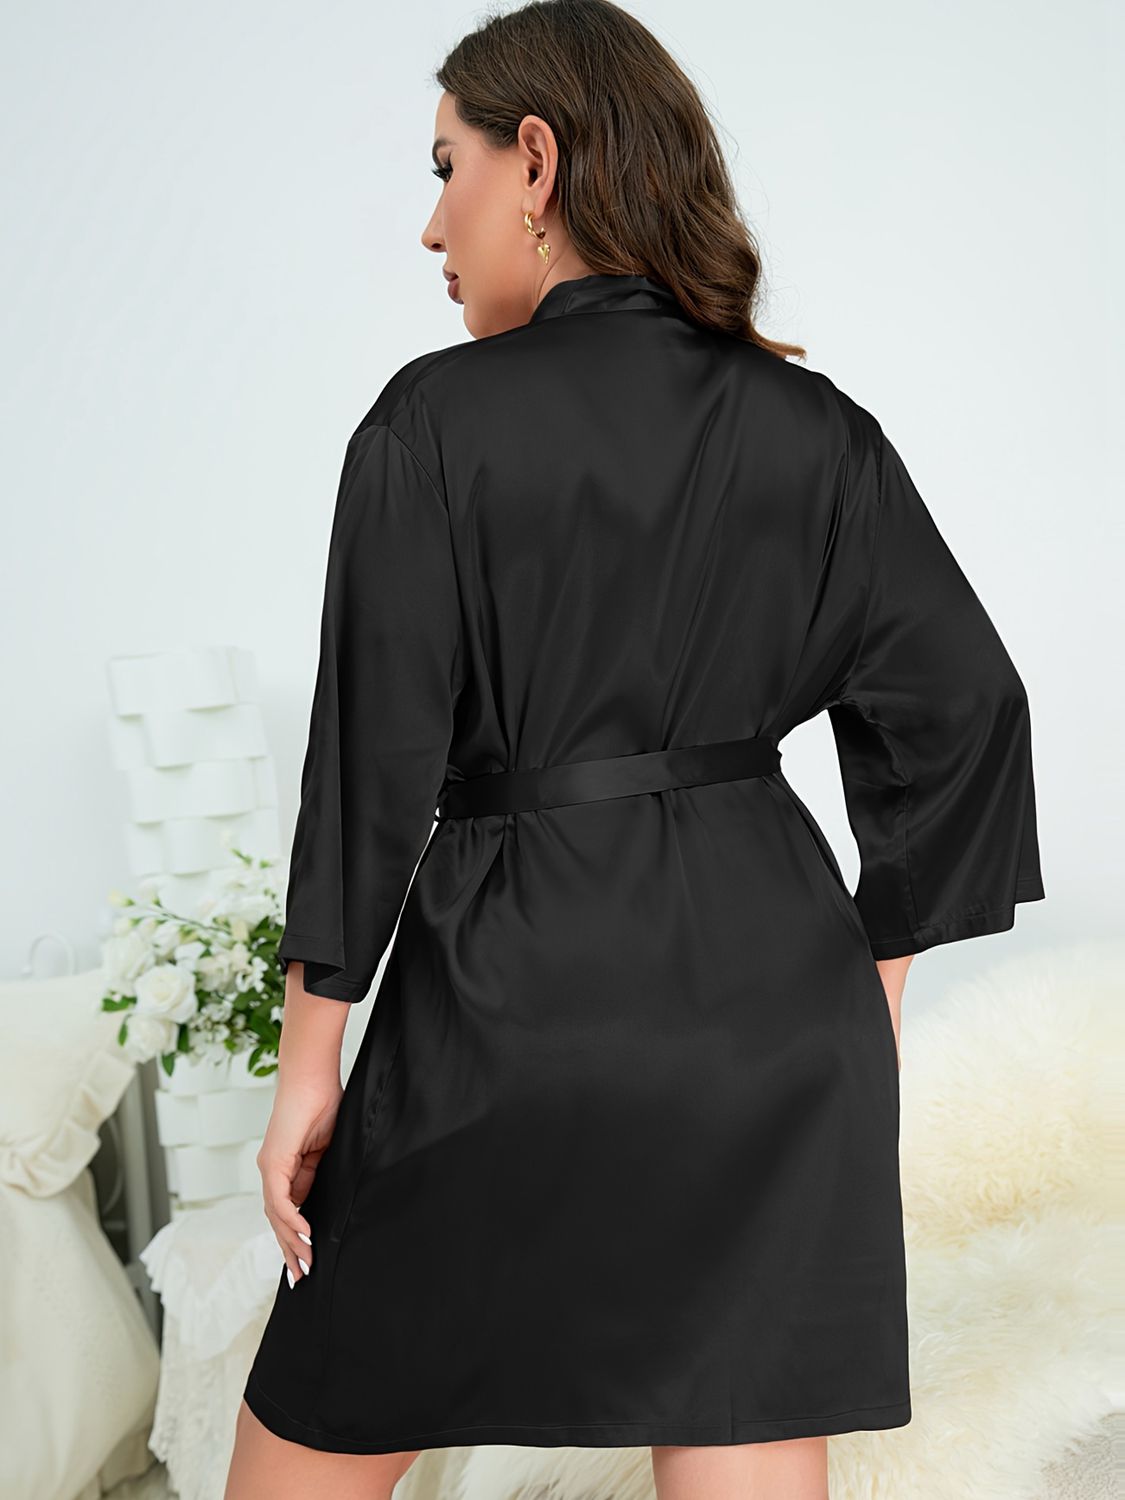 Back of model wearing black plus size robe